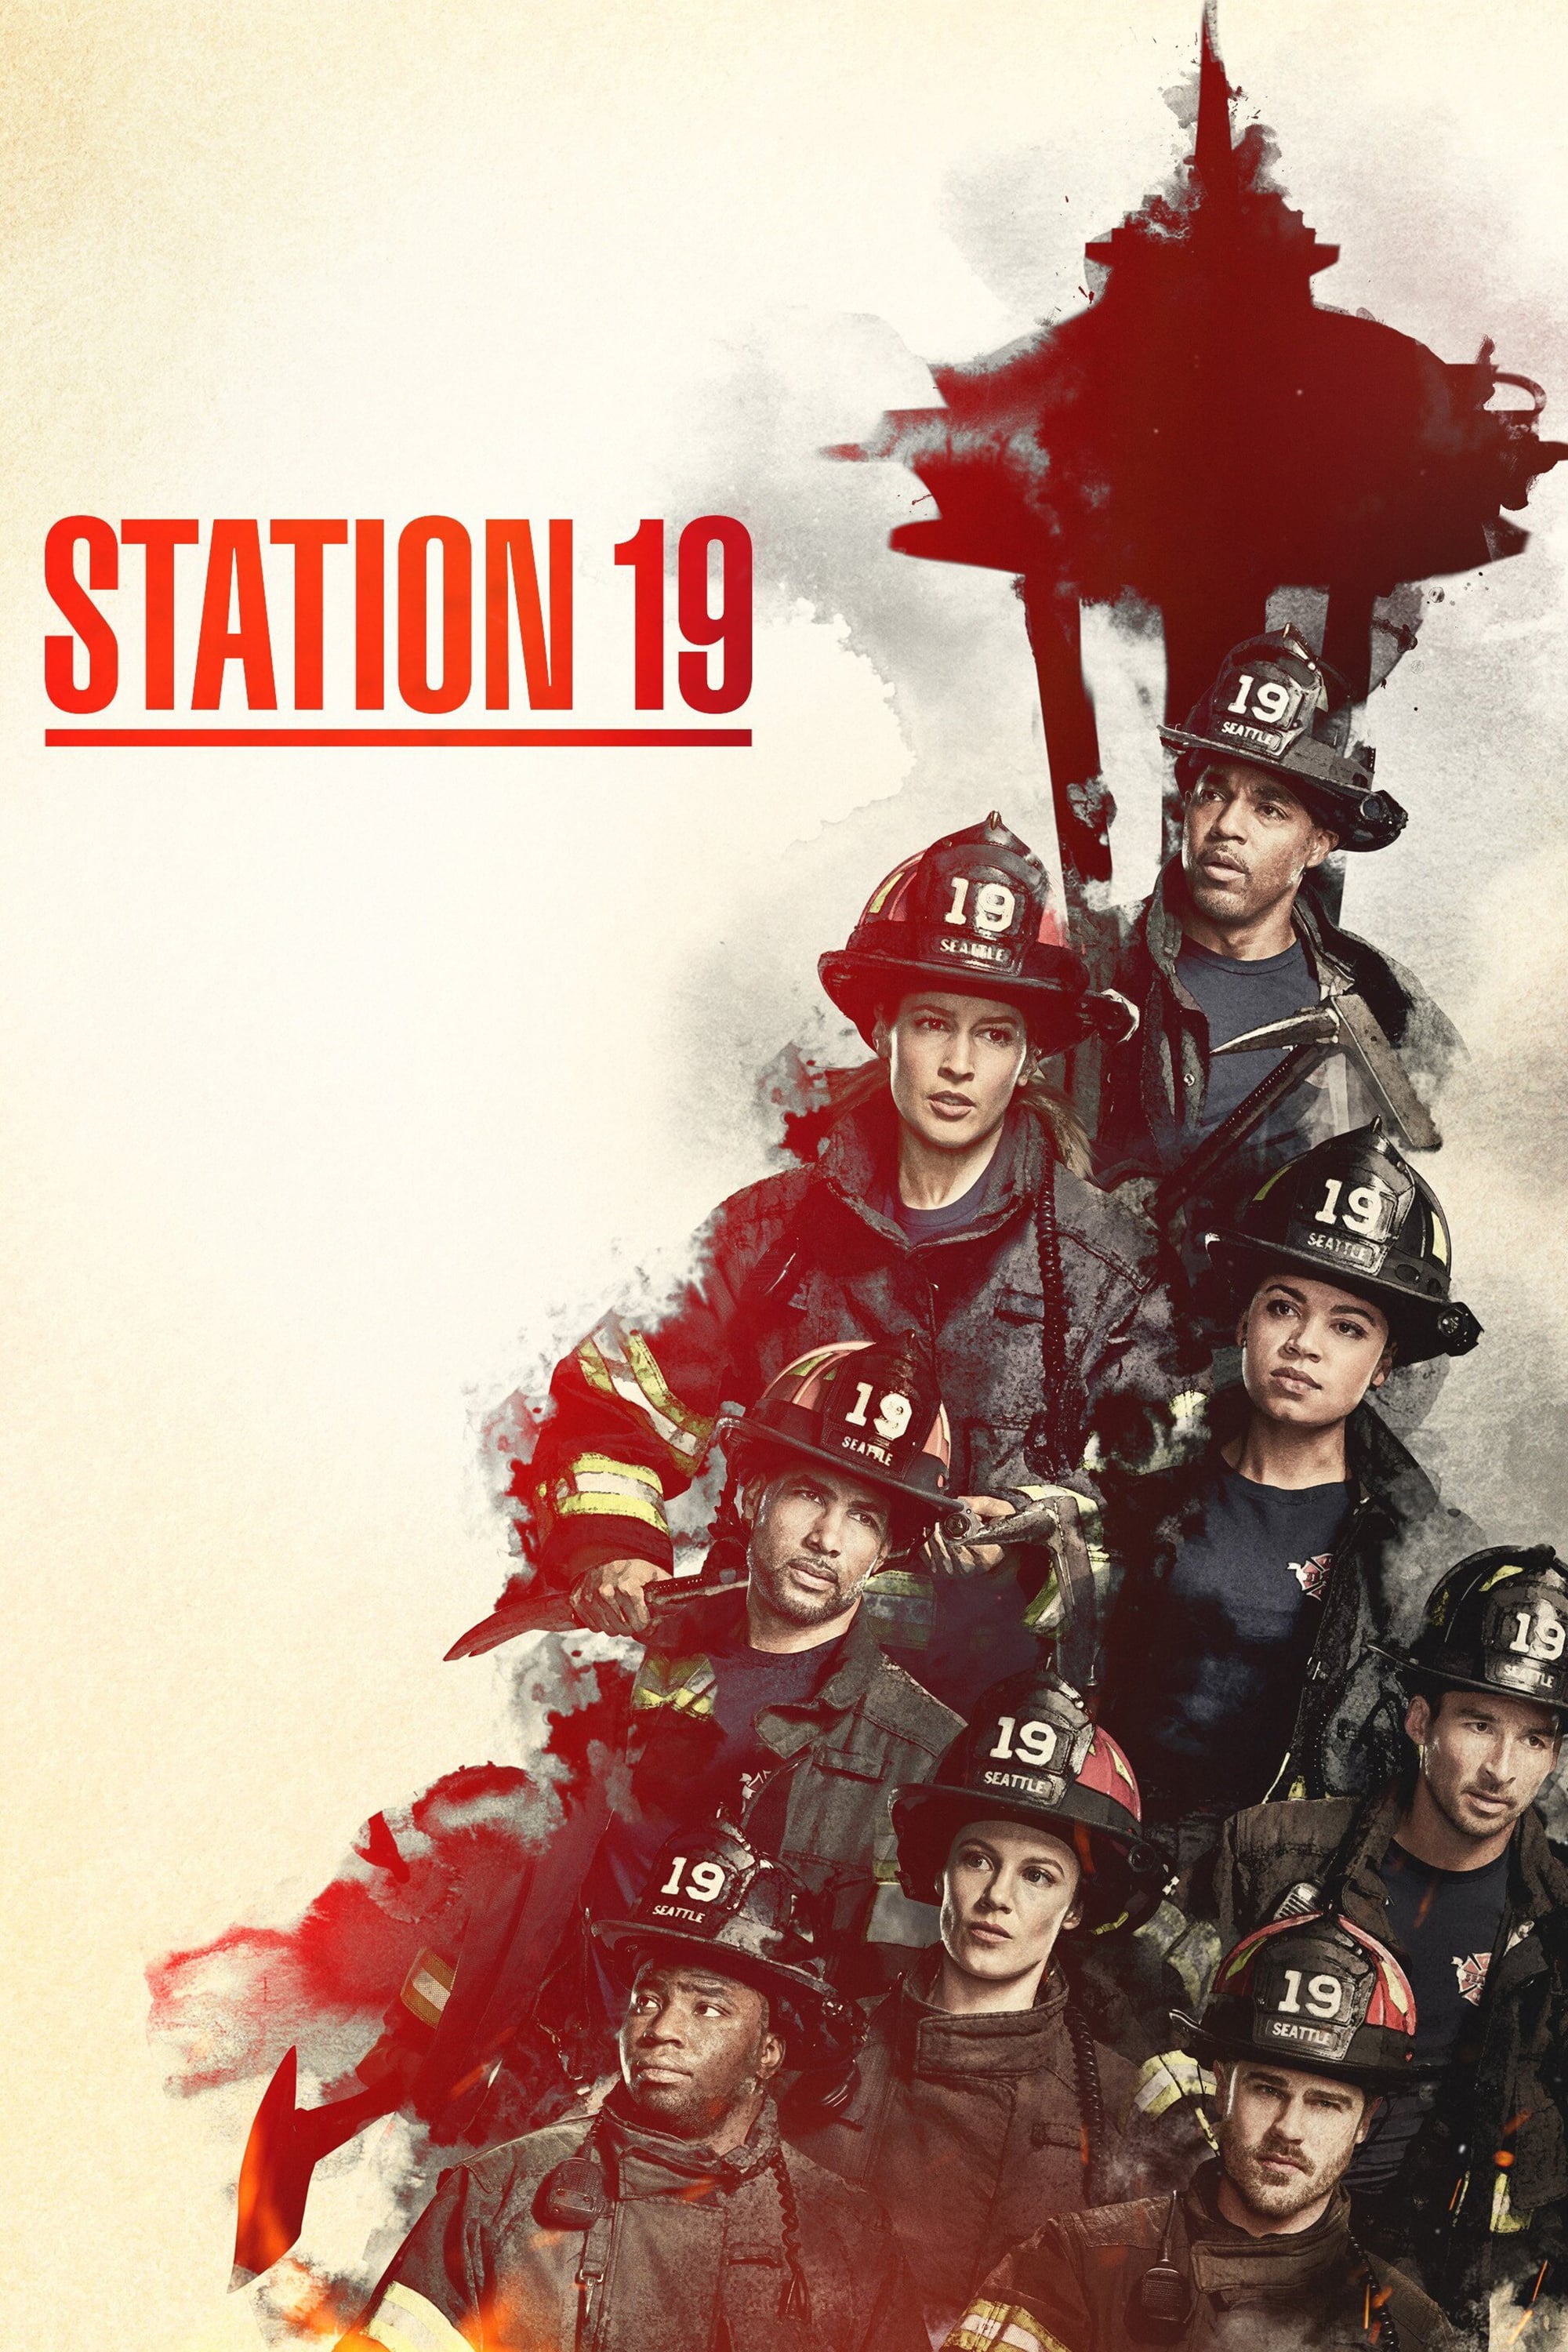 Station 19 (2018)